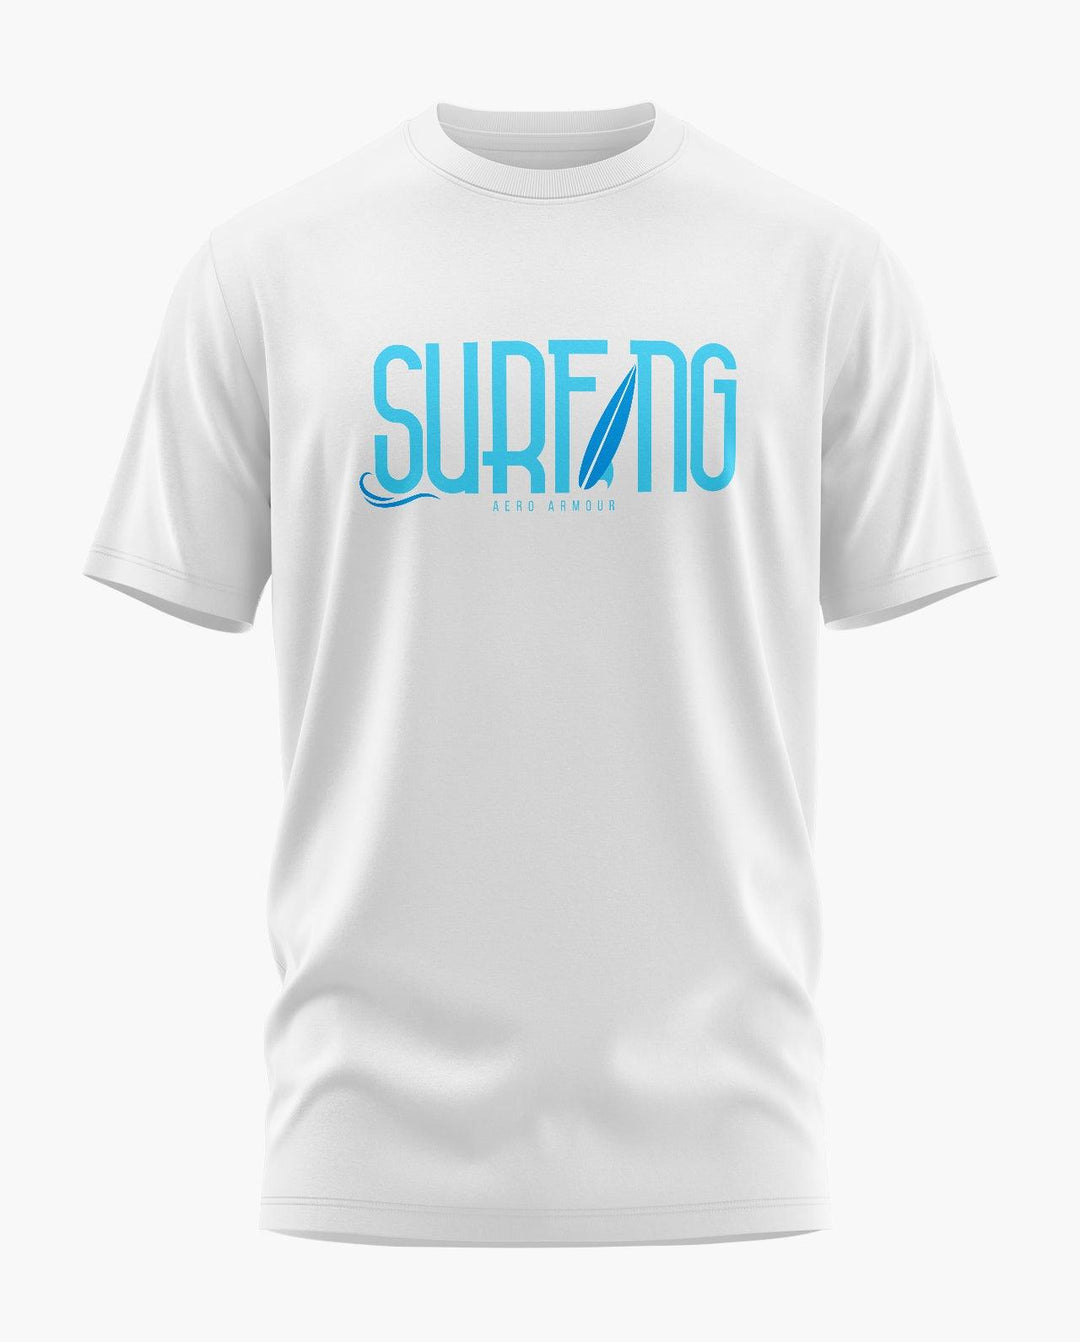 Surfing Text T-Shirt - Aero Armour